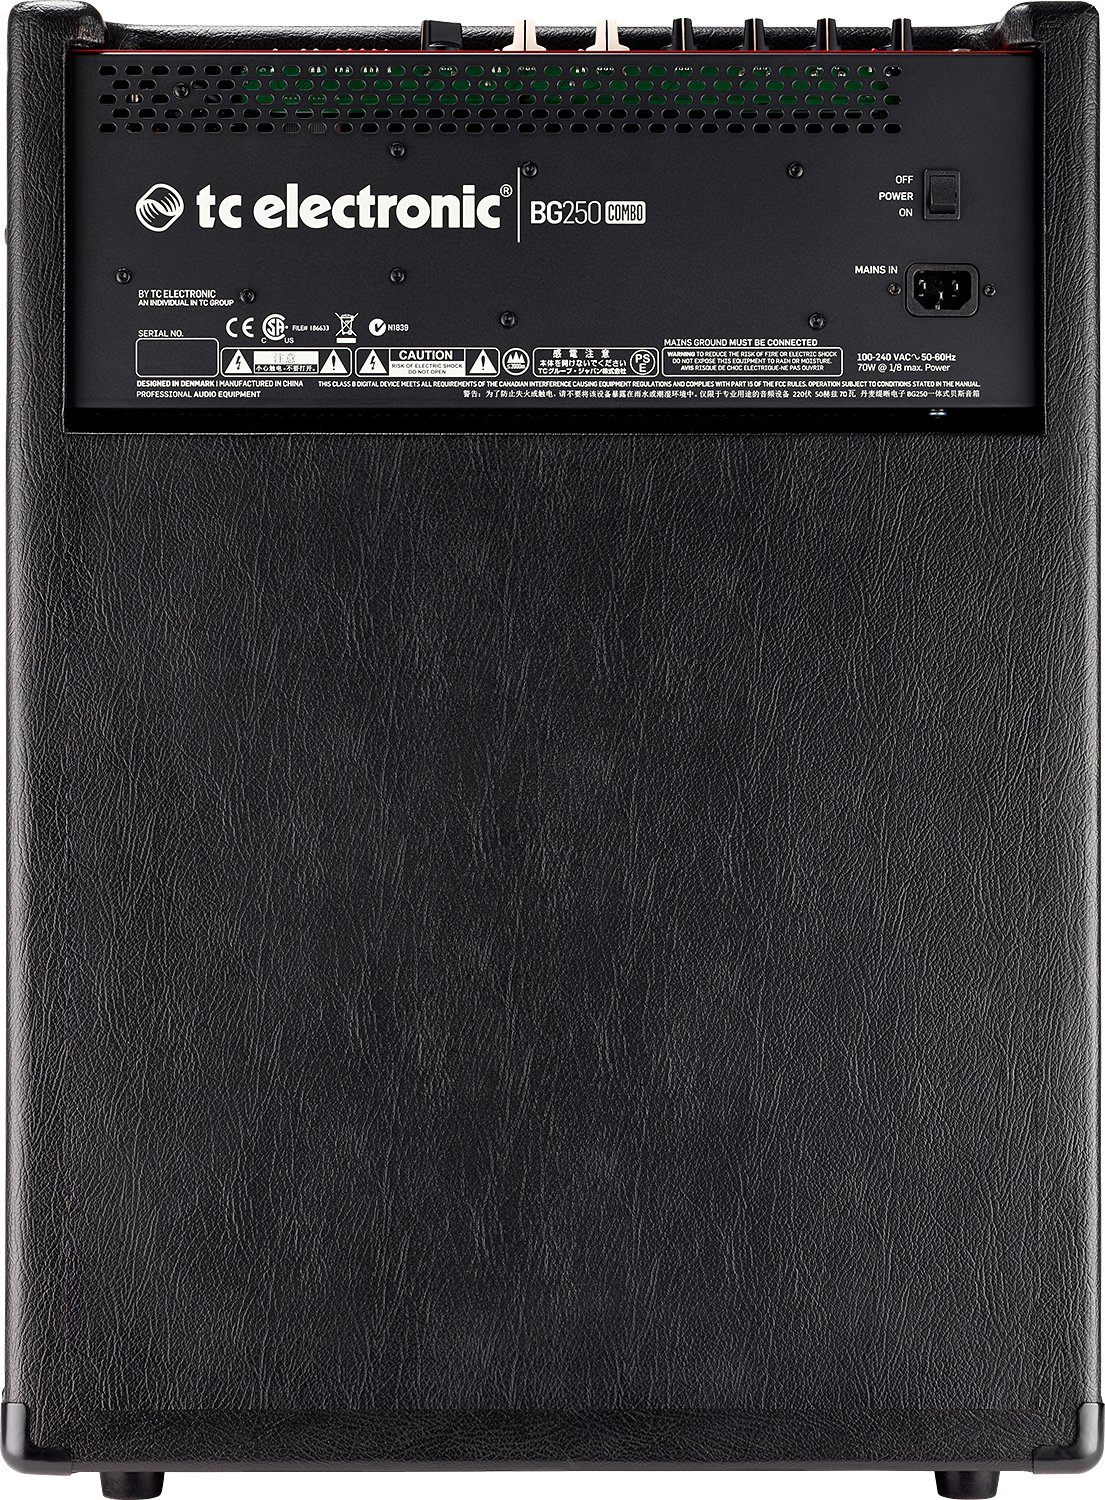 Tc Electronic Bg250 115 Mkii 2013 250w 1x15 - Combo Ampli Basse - Variation 1